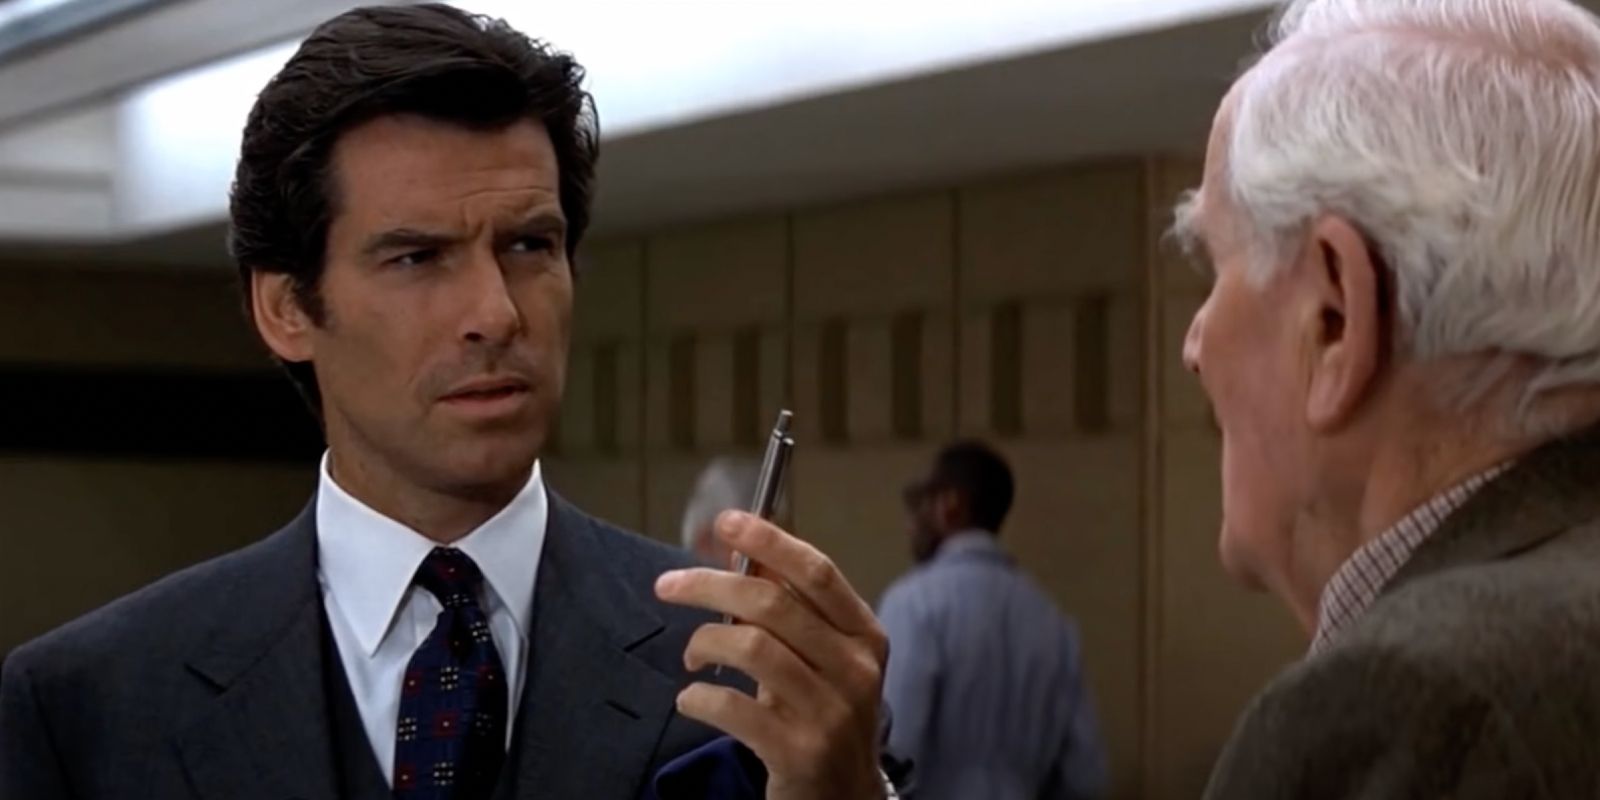 James Bond discuss an explosive pen bomb gadget with Q in the film GoldenEye.